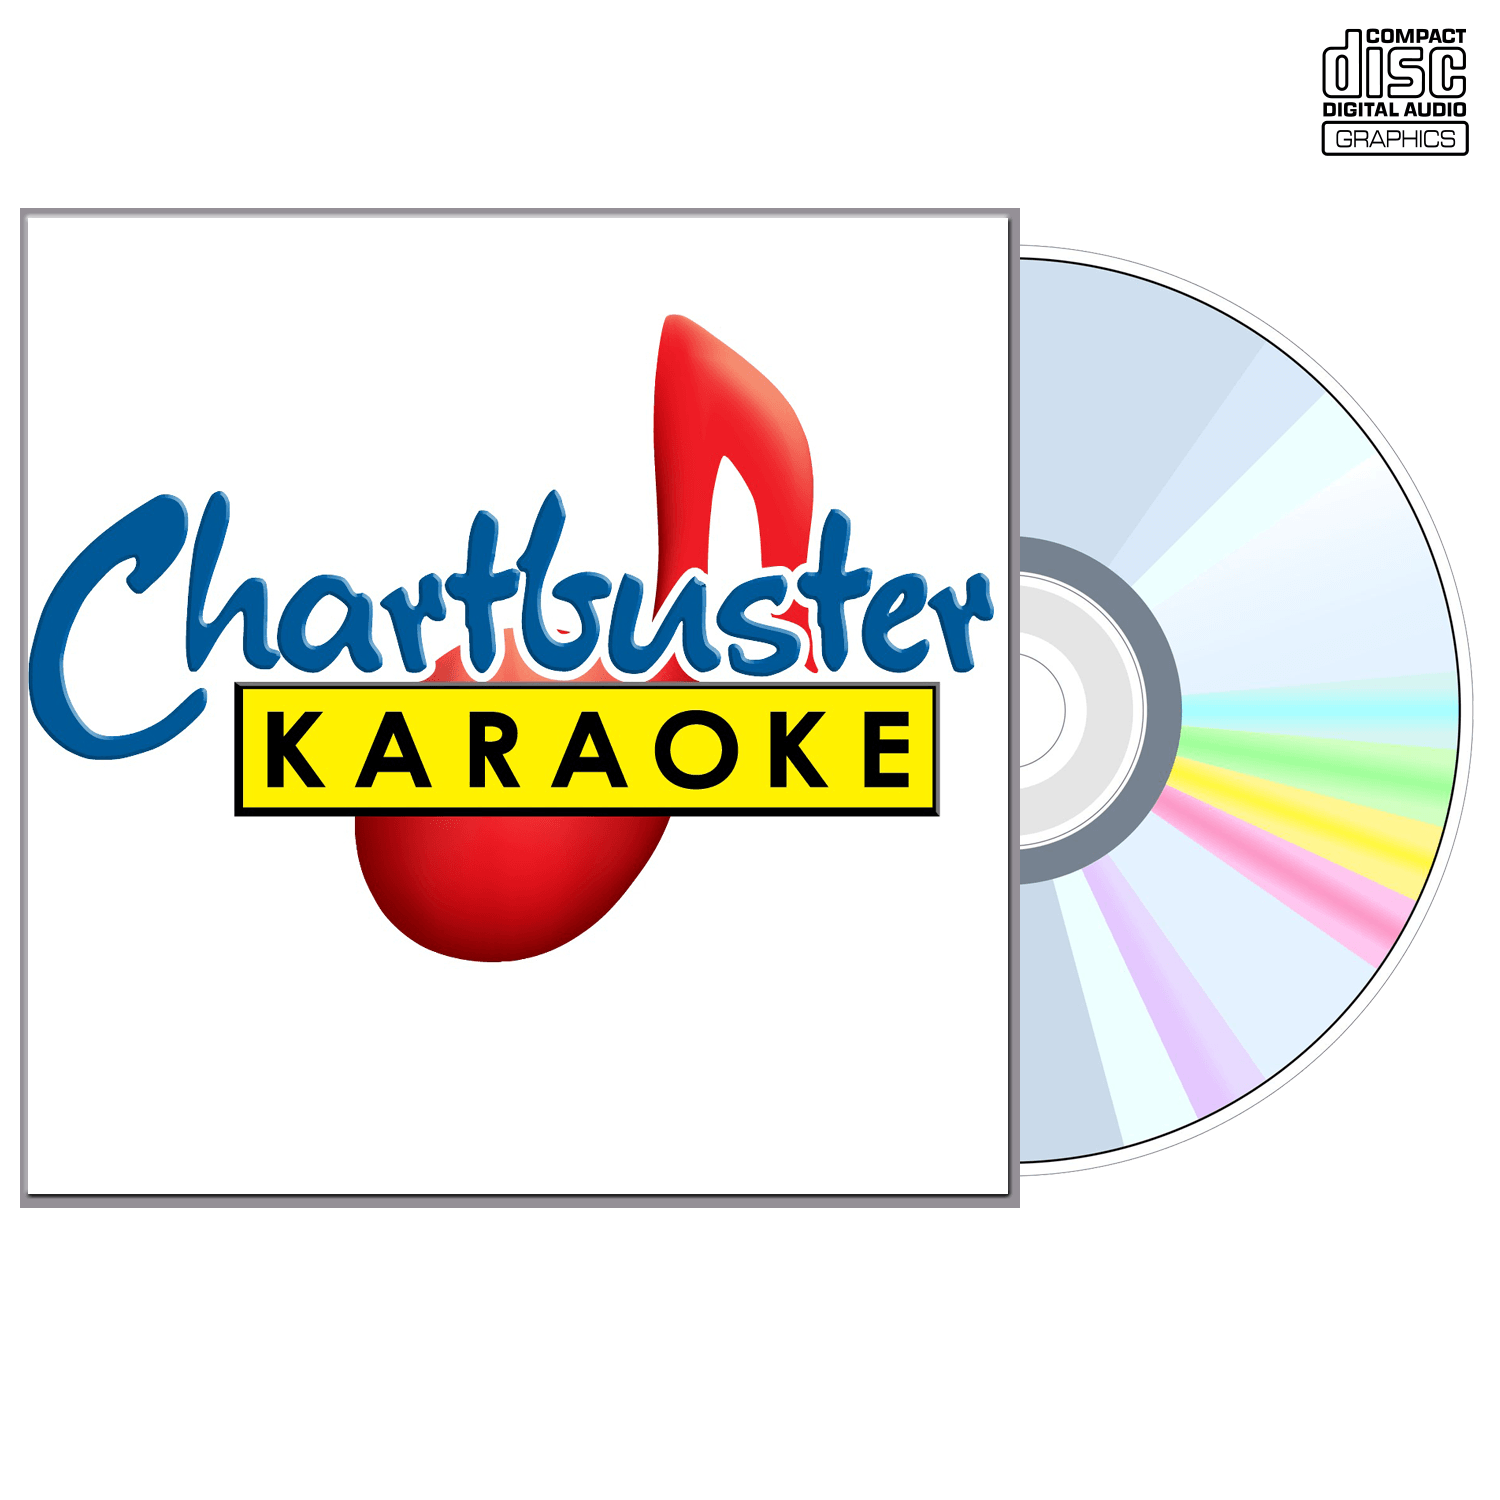 Old Time Memories Vol 2 - CD+G - Chartbuster Karaoke - Karaoke Home Entertainment